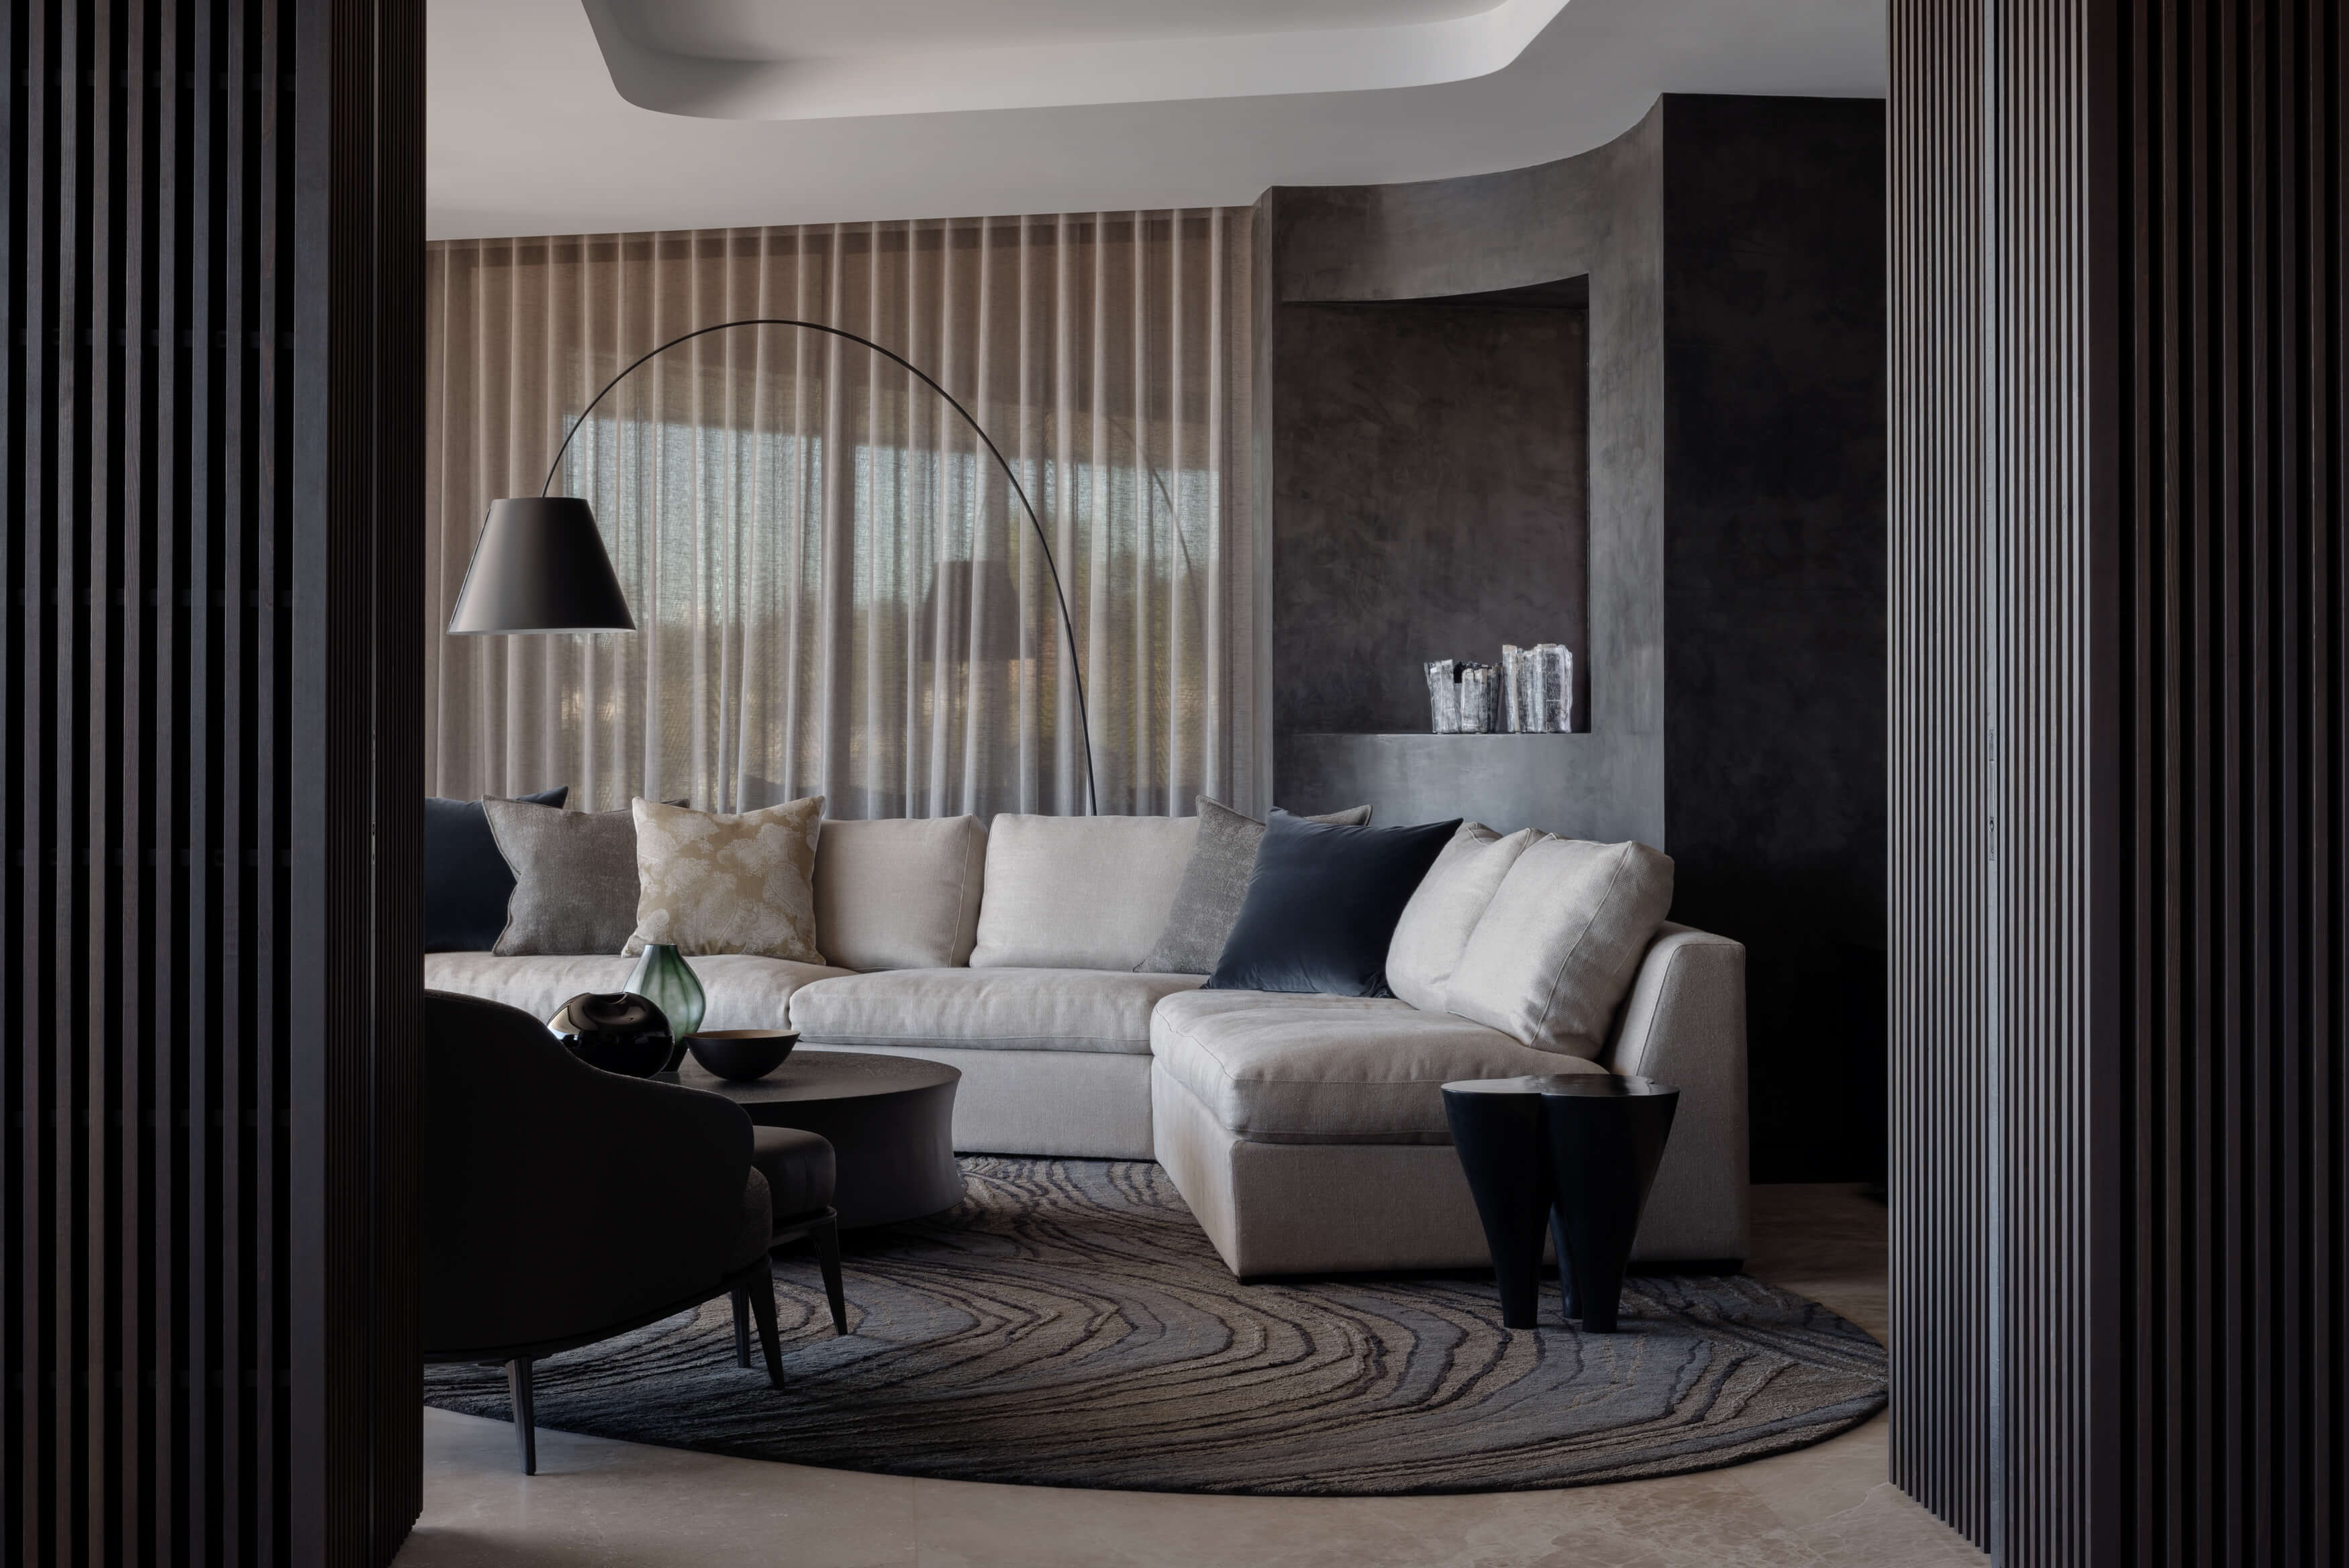 Stafford Architecture - Interior Photograph of the luxury design